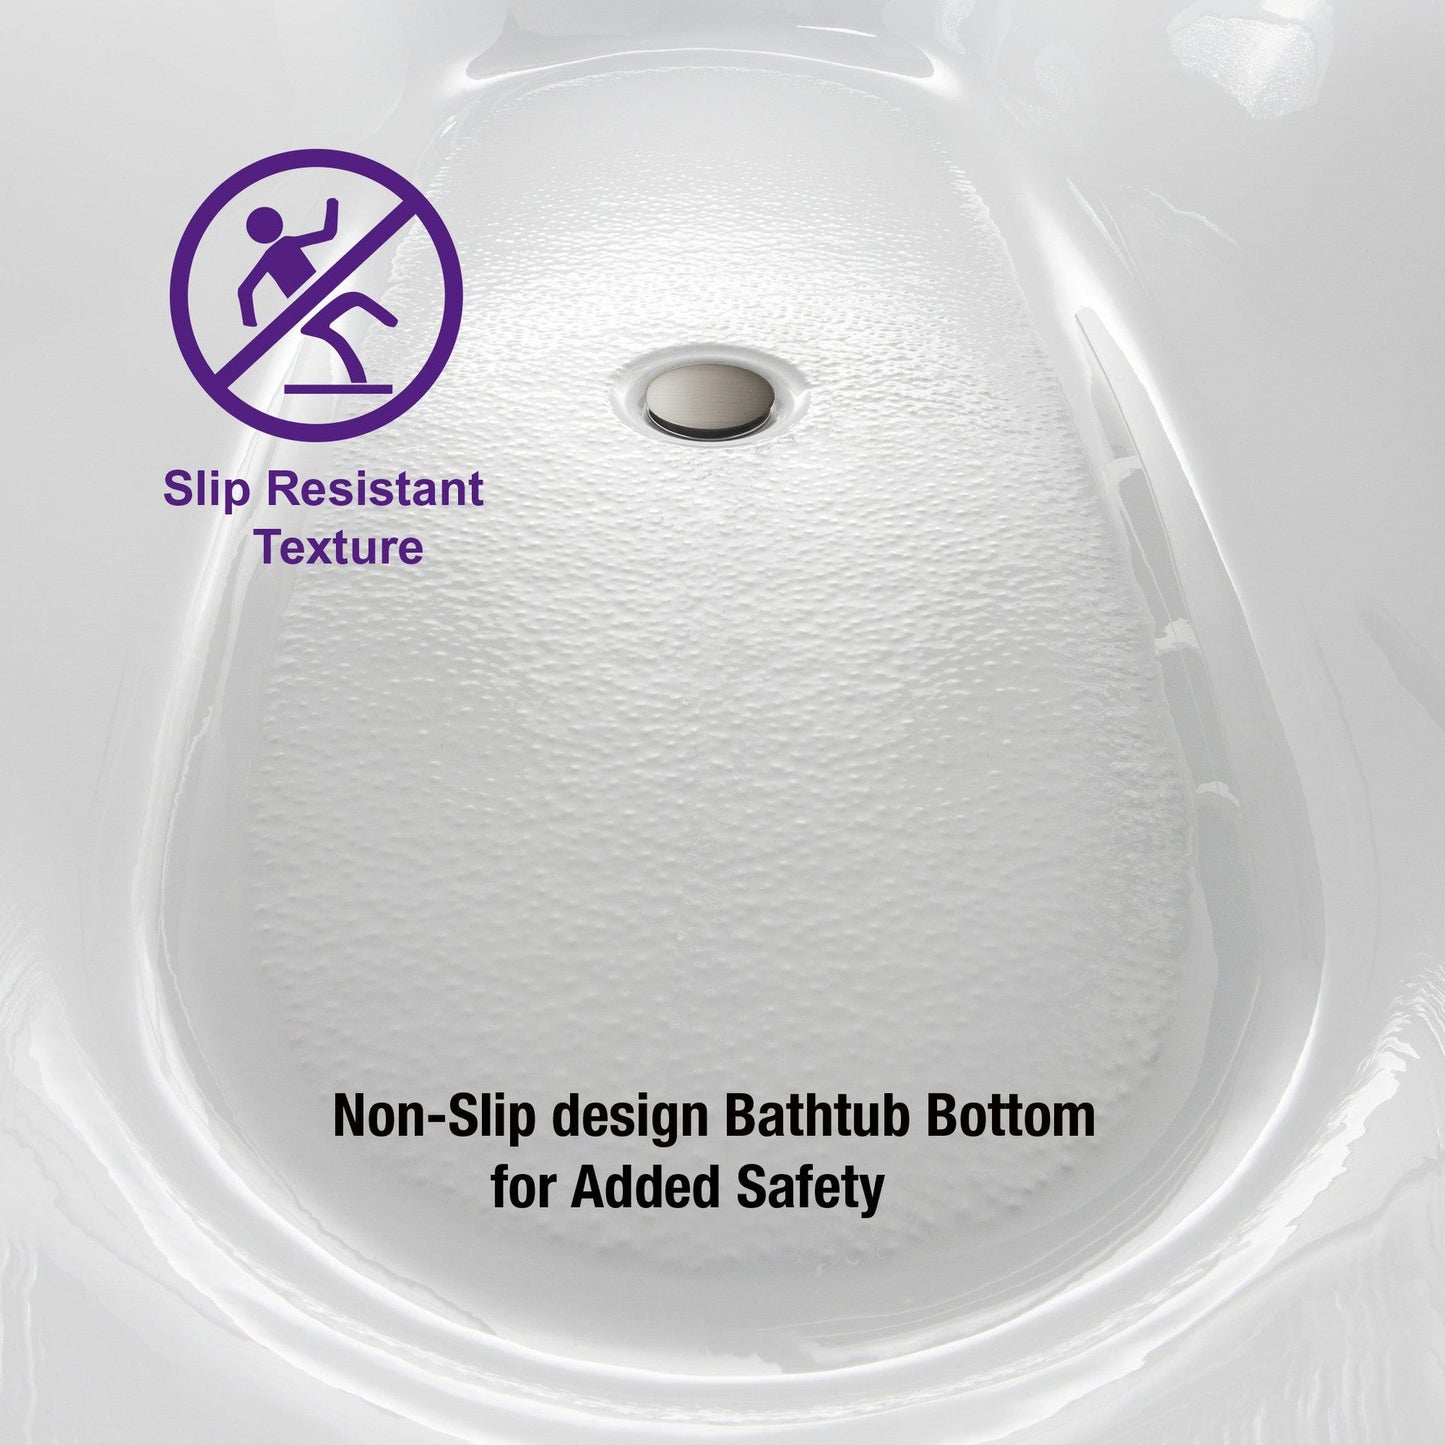 WoodBridge B1538 71" White Acrylic Freestanding Soaking Bathtub With Brushed Nickel Overflow and Drain